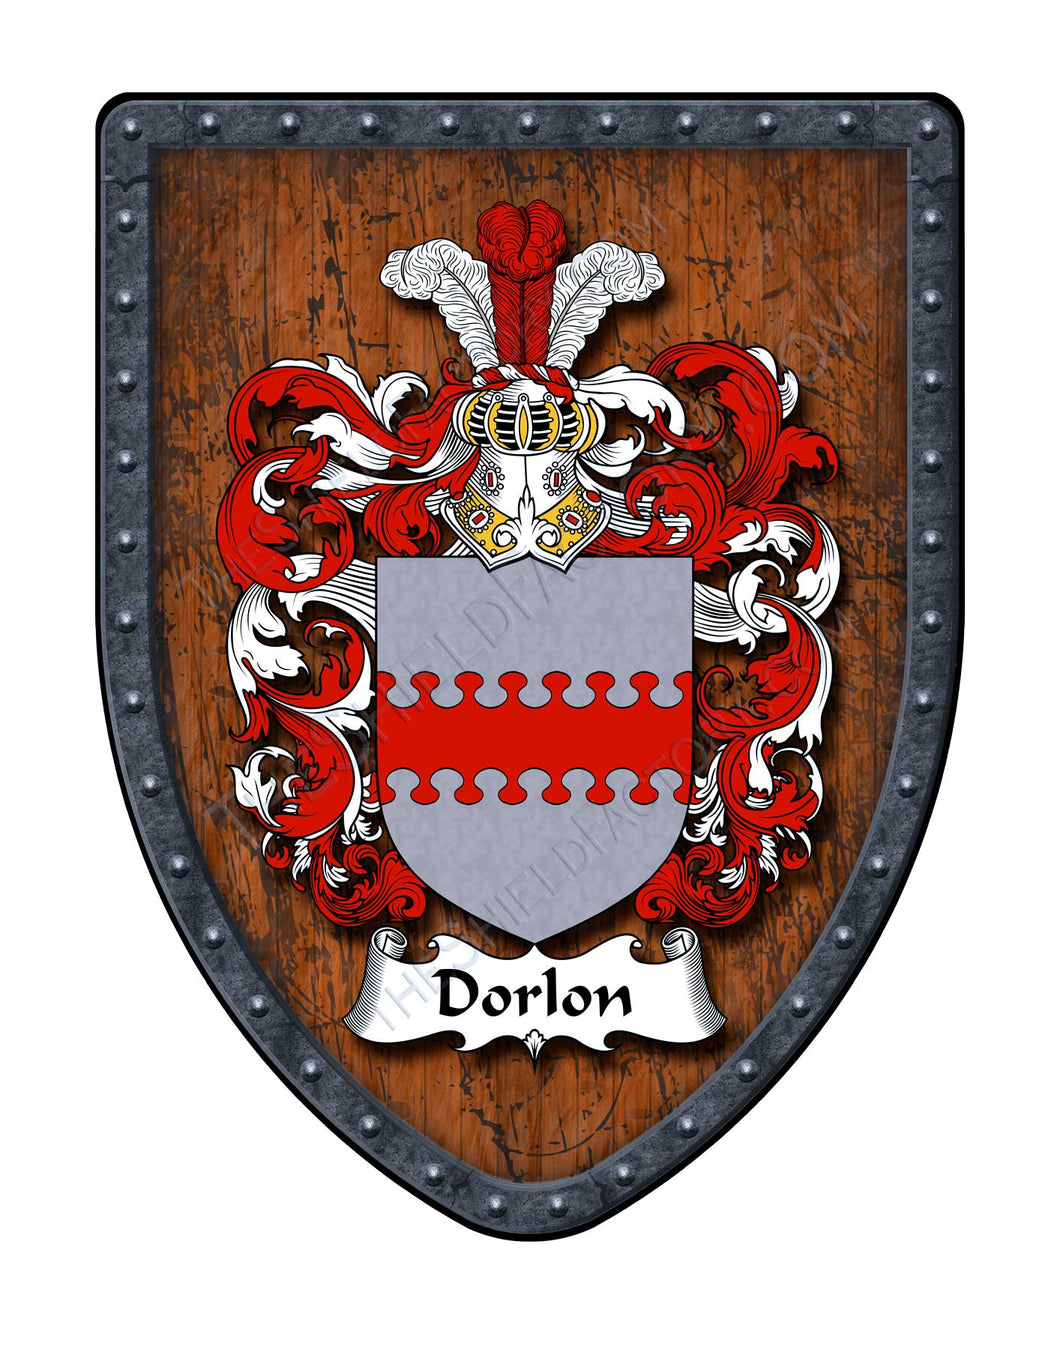 Dorlon Coat of Arms